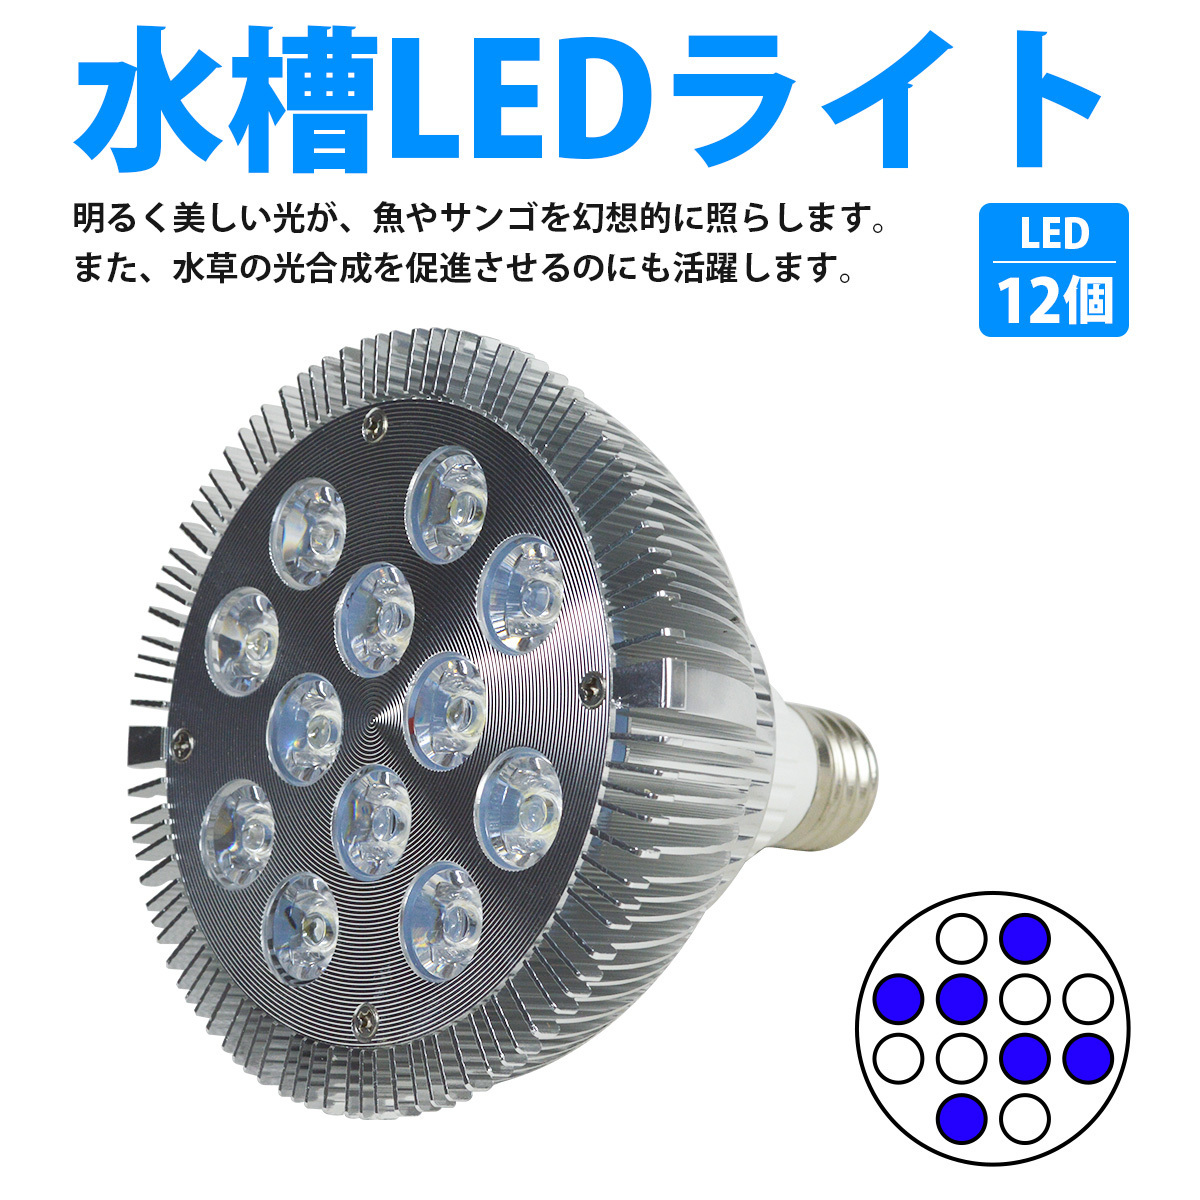 LED 電球 スポットライト 24W(2W×12)白6青6 水槽 照明 E26 水草 LEDスポットライト 電気 水草 サンゴ 熱帯魚 観賞魚 植物育成_画像2